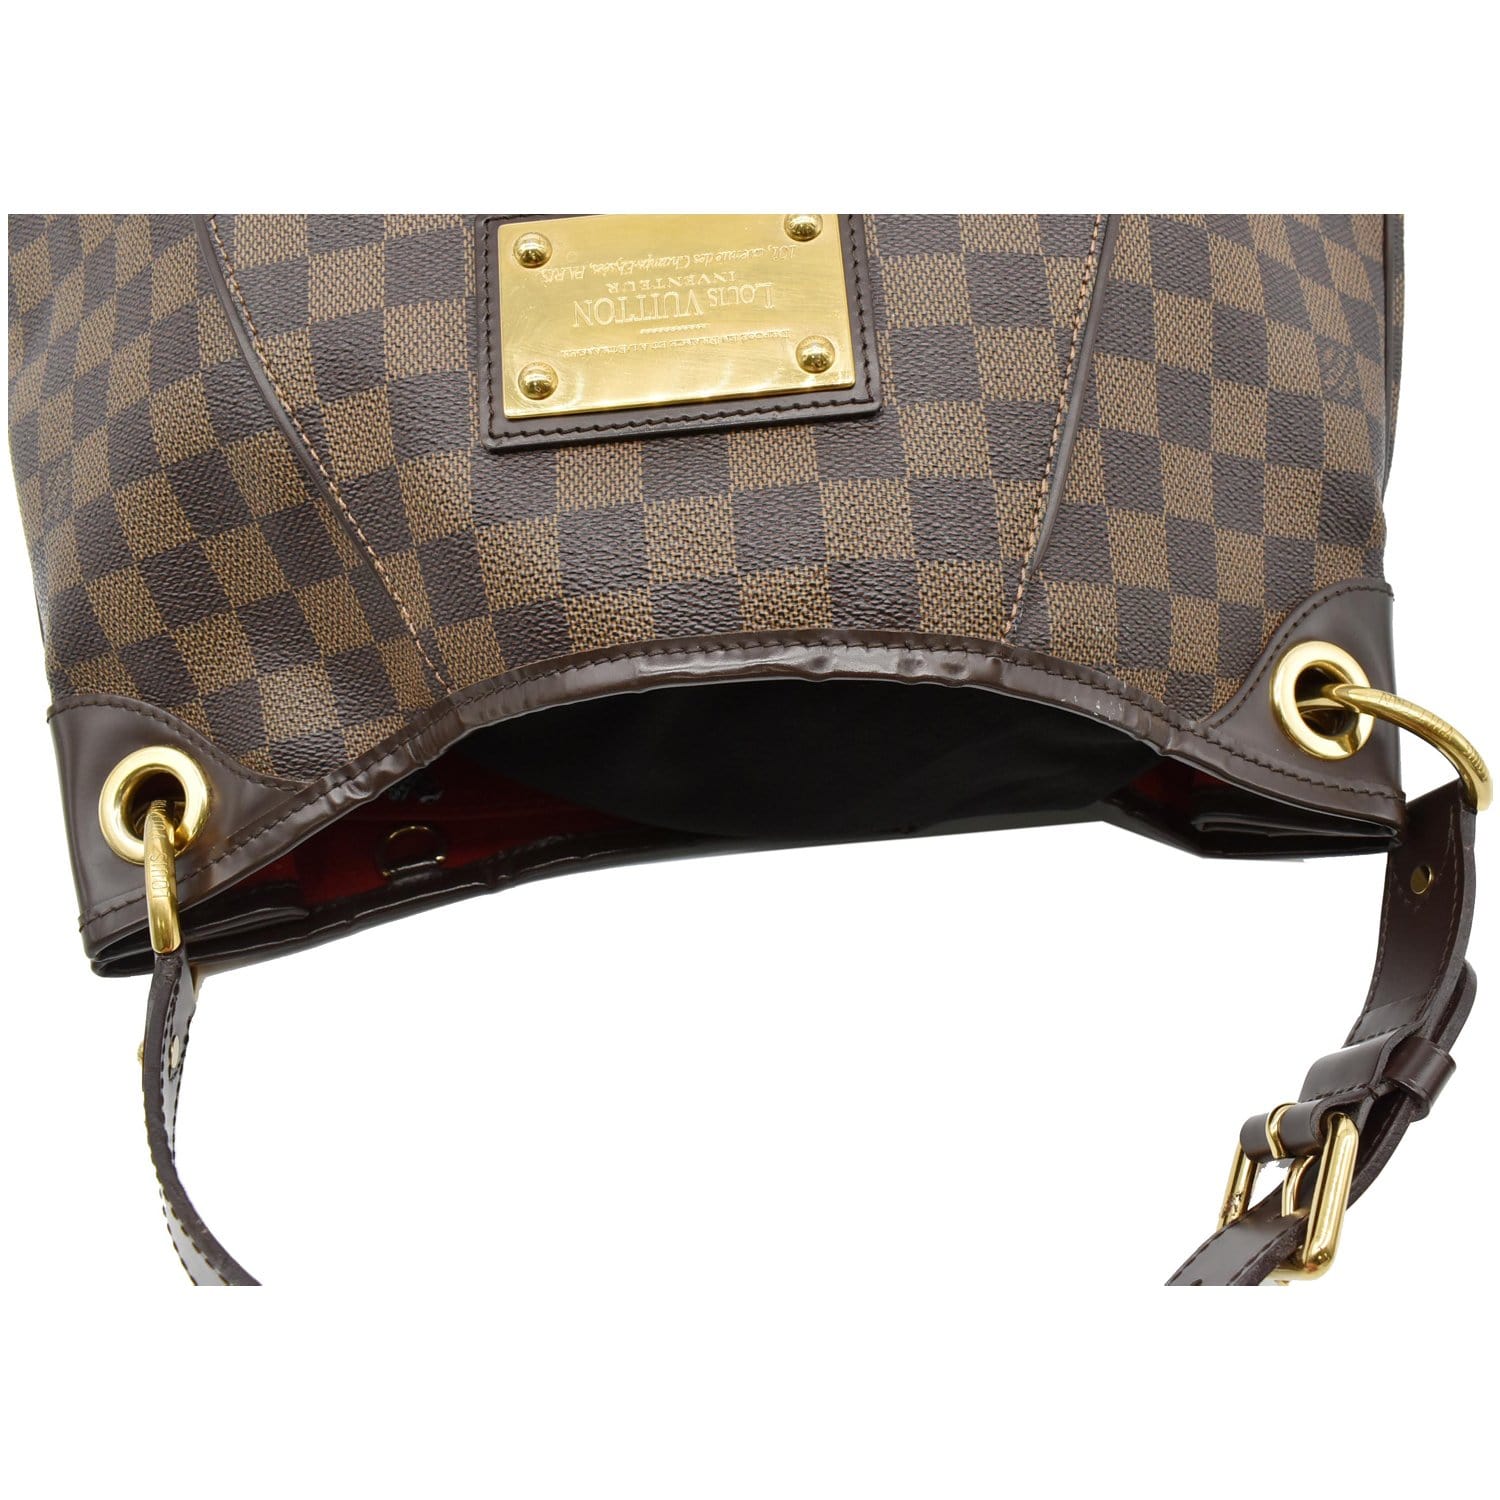 Louis Vuitton Handbag, 'galliera' Auction